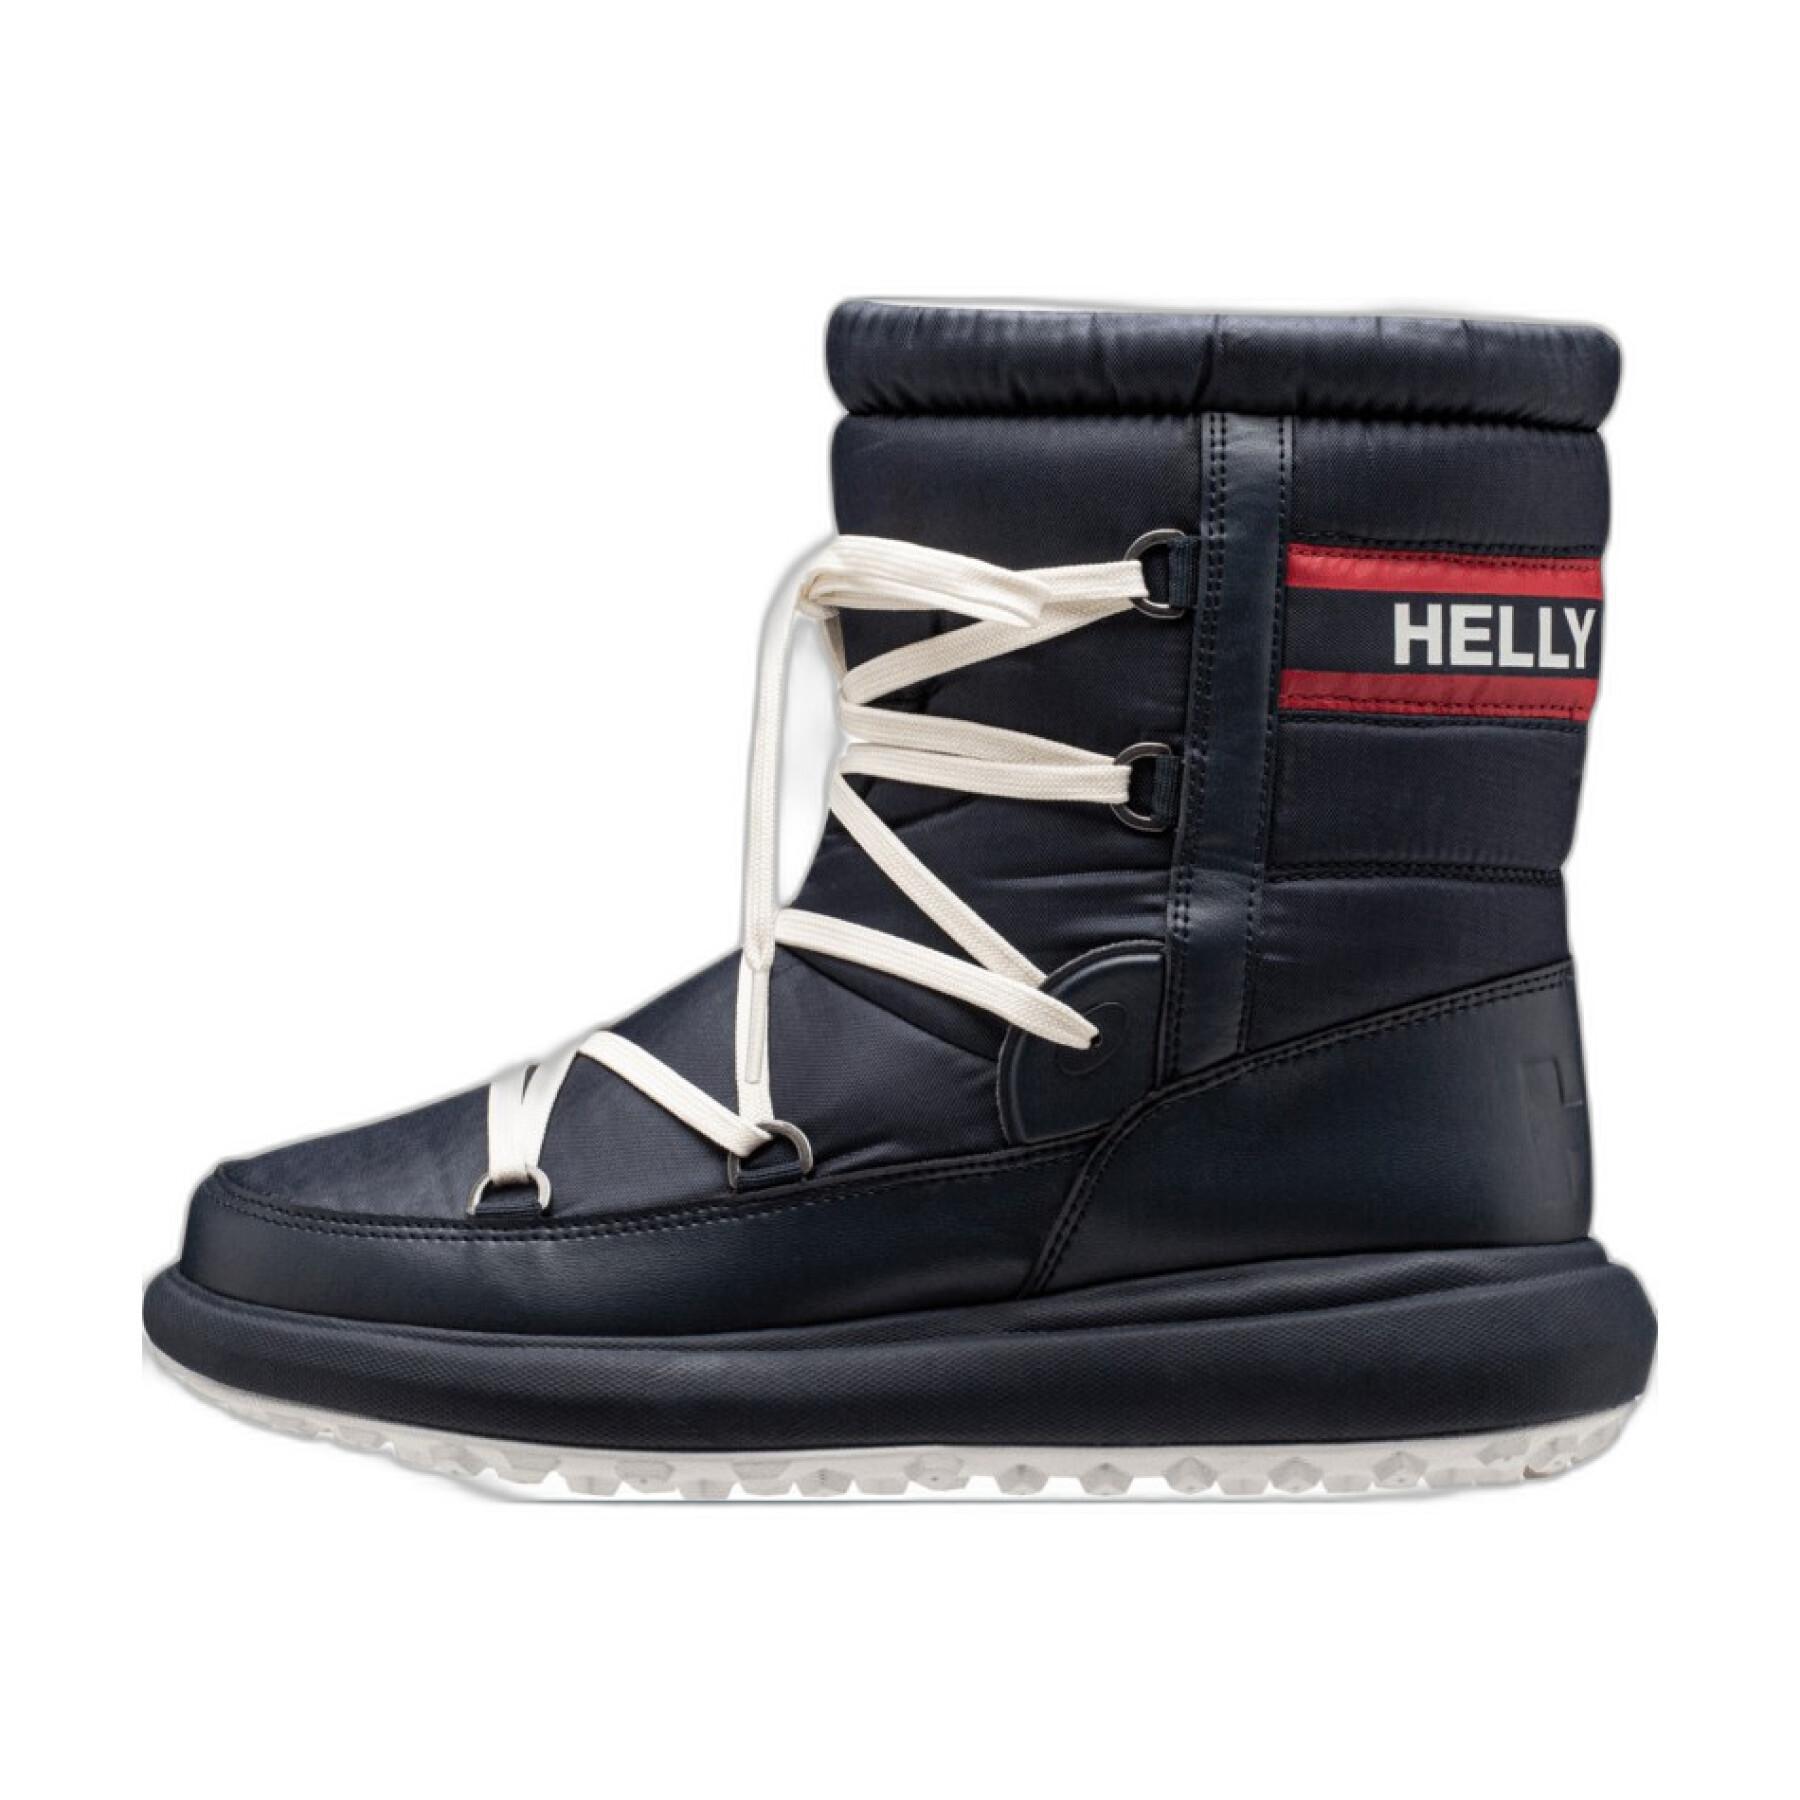 Snow boots short woman Helly Hansen Isobella